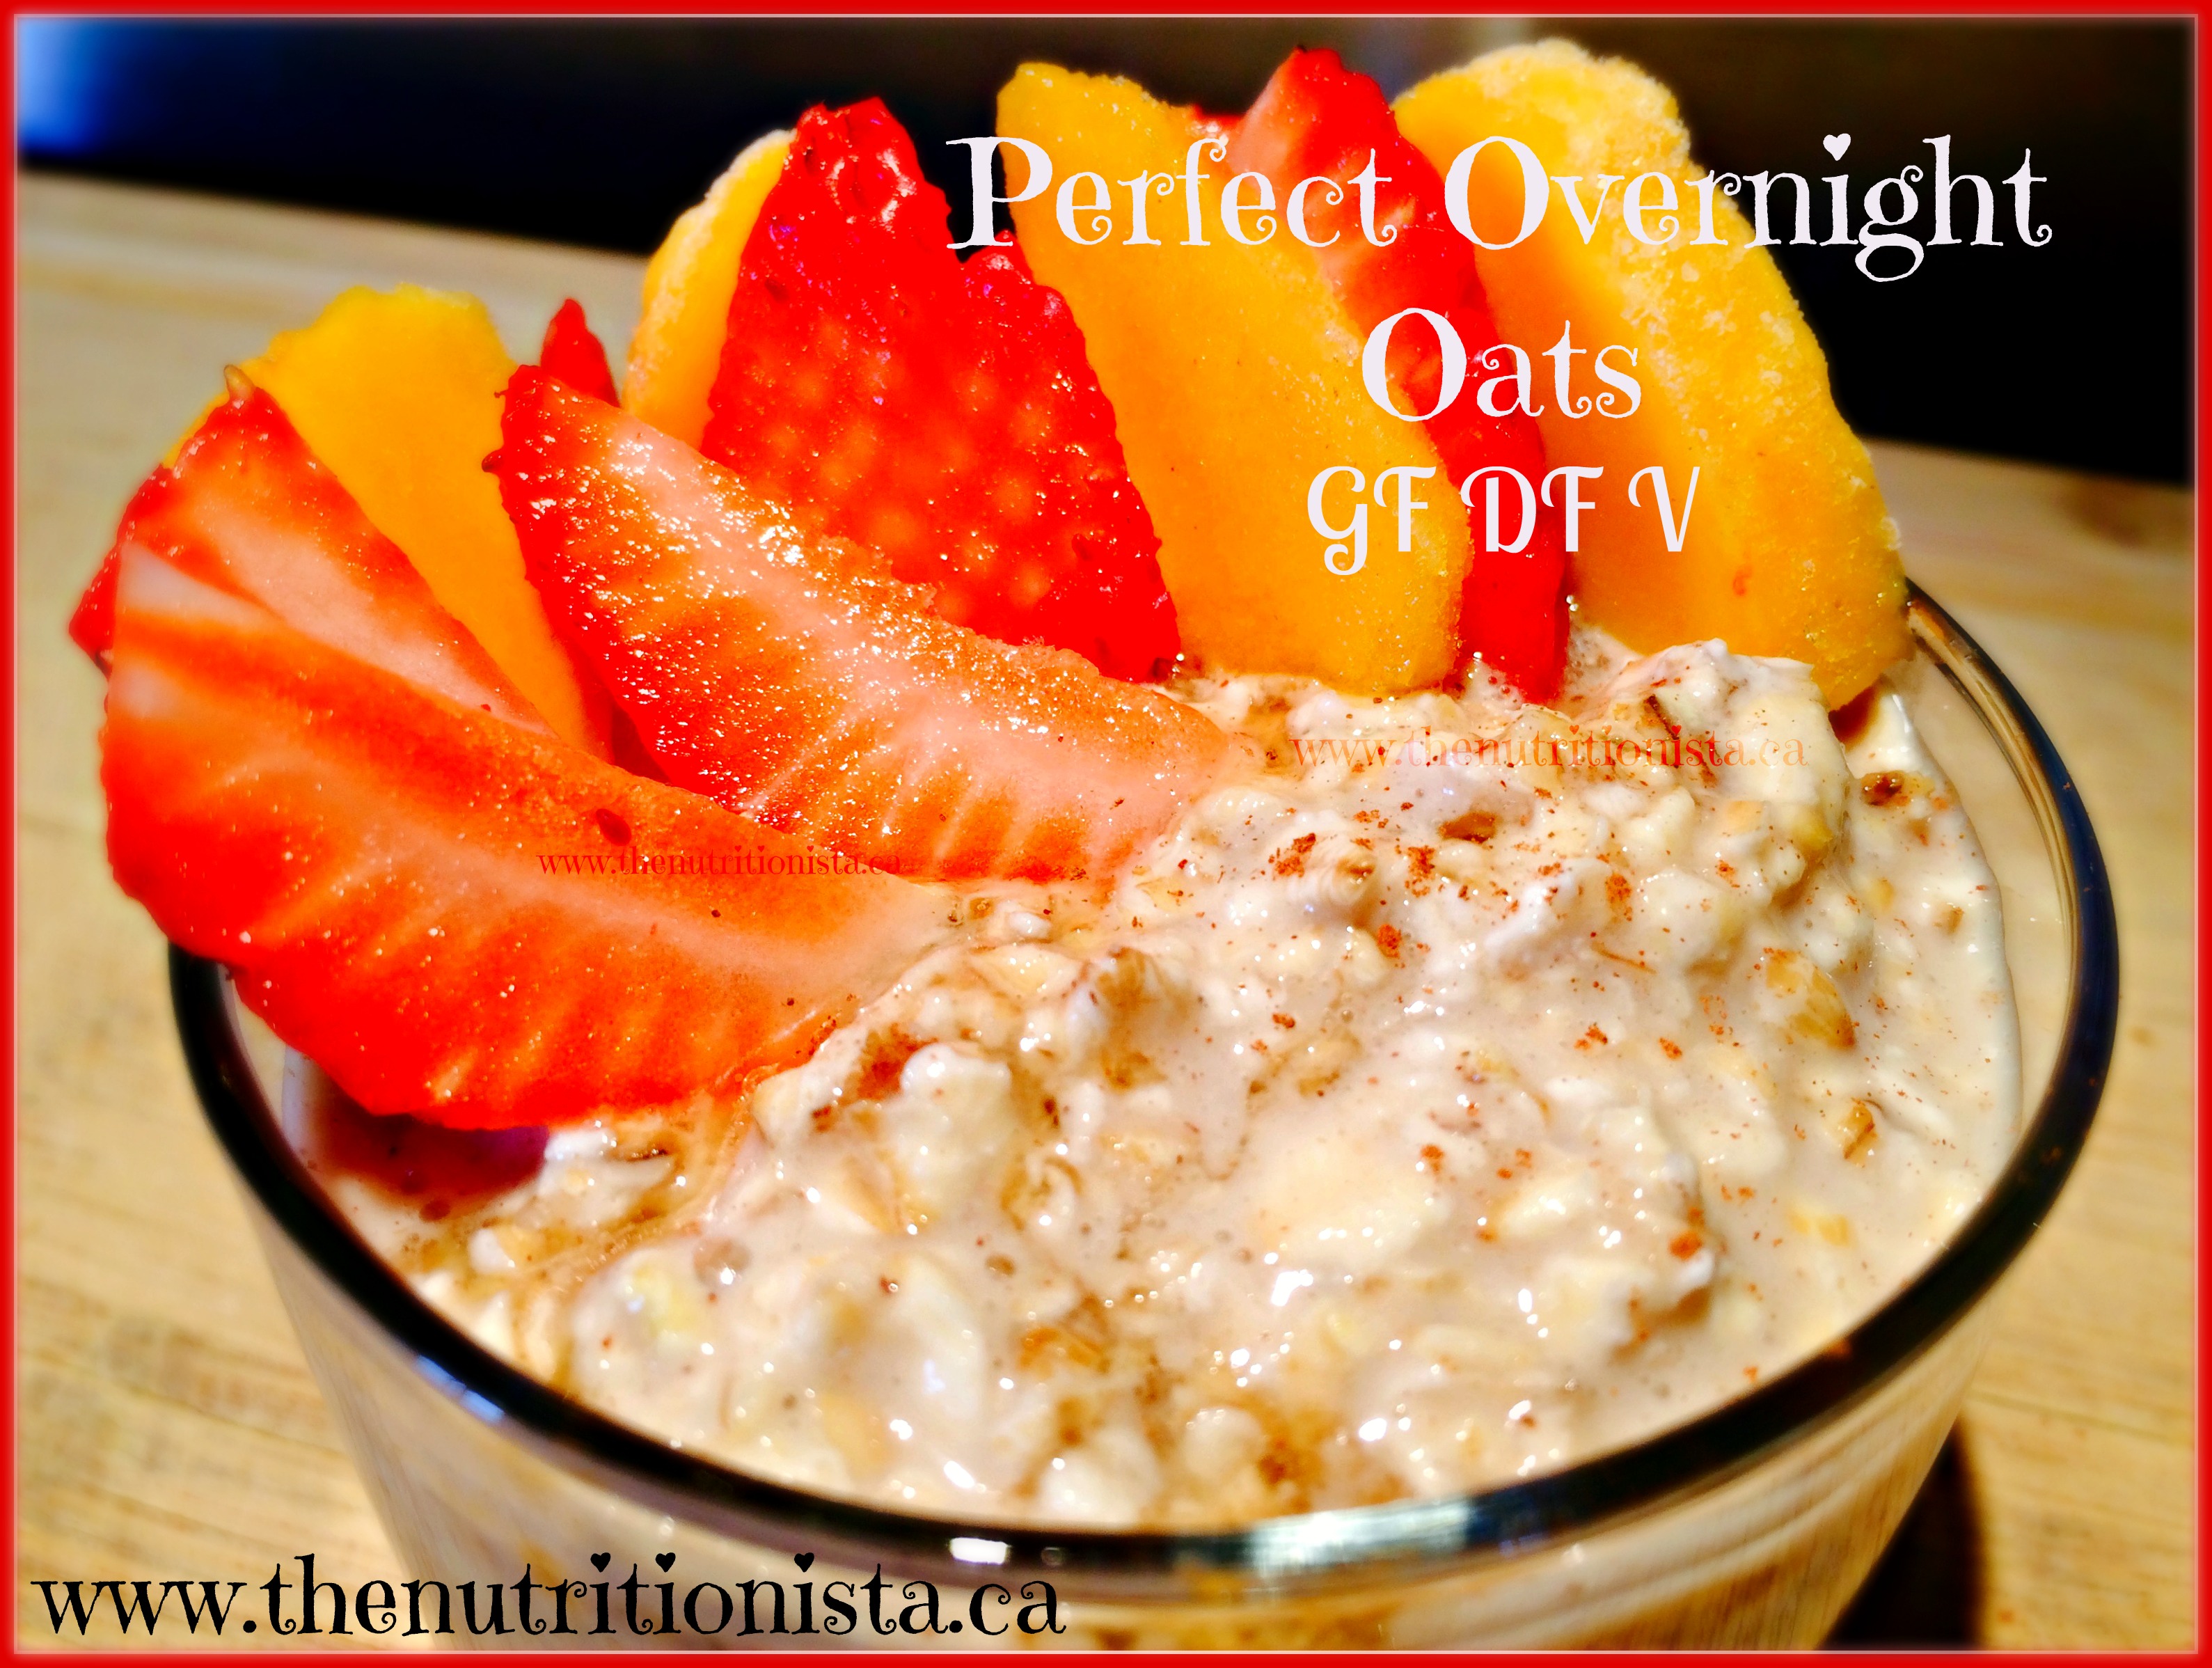 The perfect gluten free overnight oats. Via @bcnutritionista